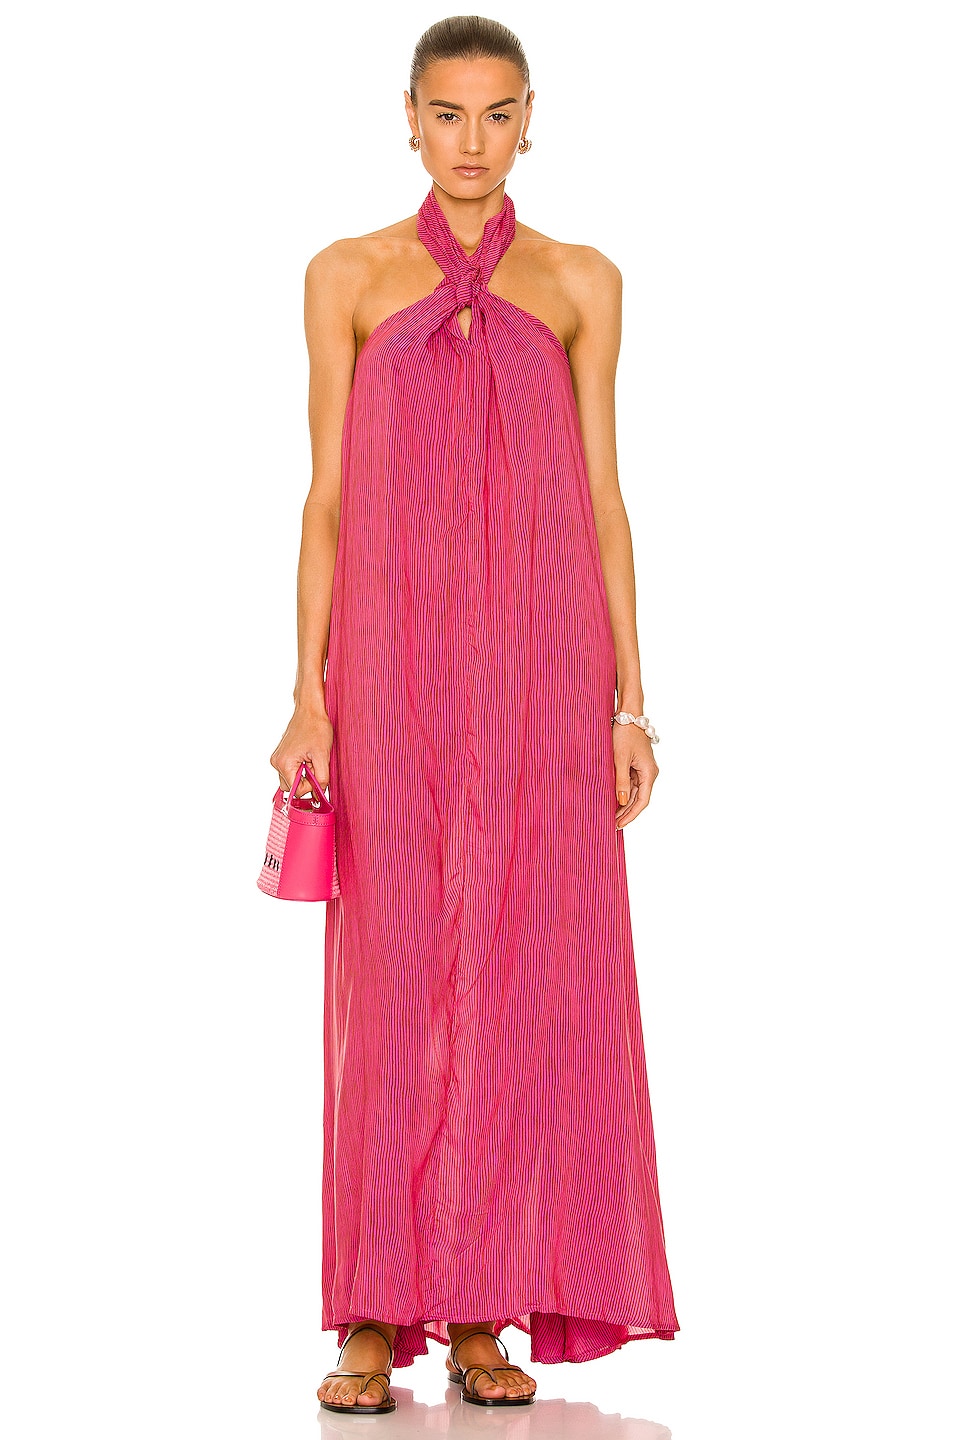 Natalie Martin Astrid Dress in Wobbly Stripe Puglia Pink | FWRD